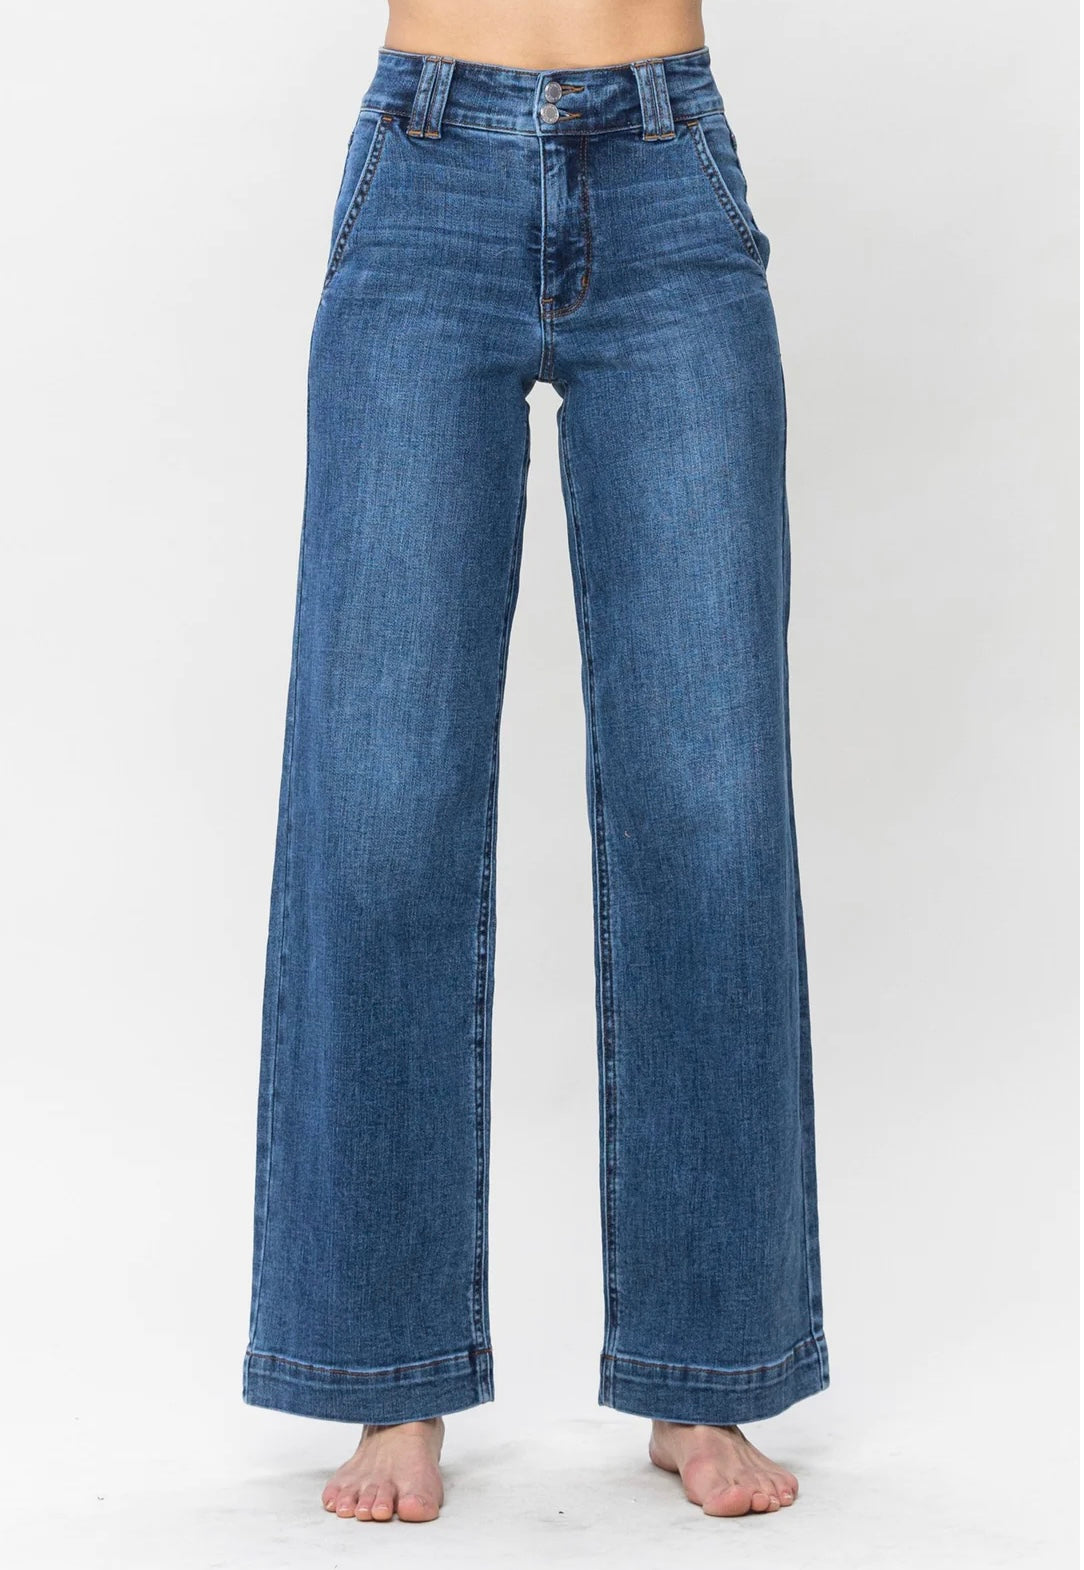 The Colette Denim Full-Length Wide-Leg Jeans by Maeve | Anthropologie